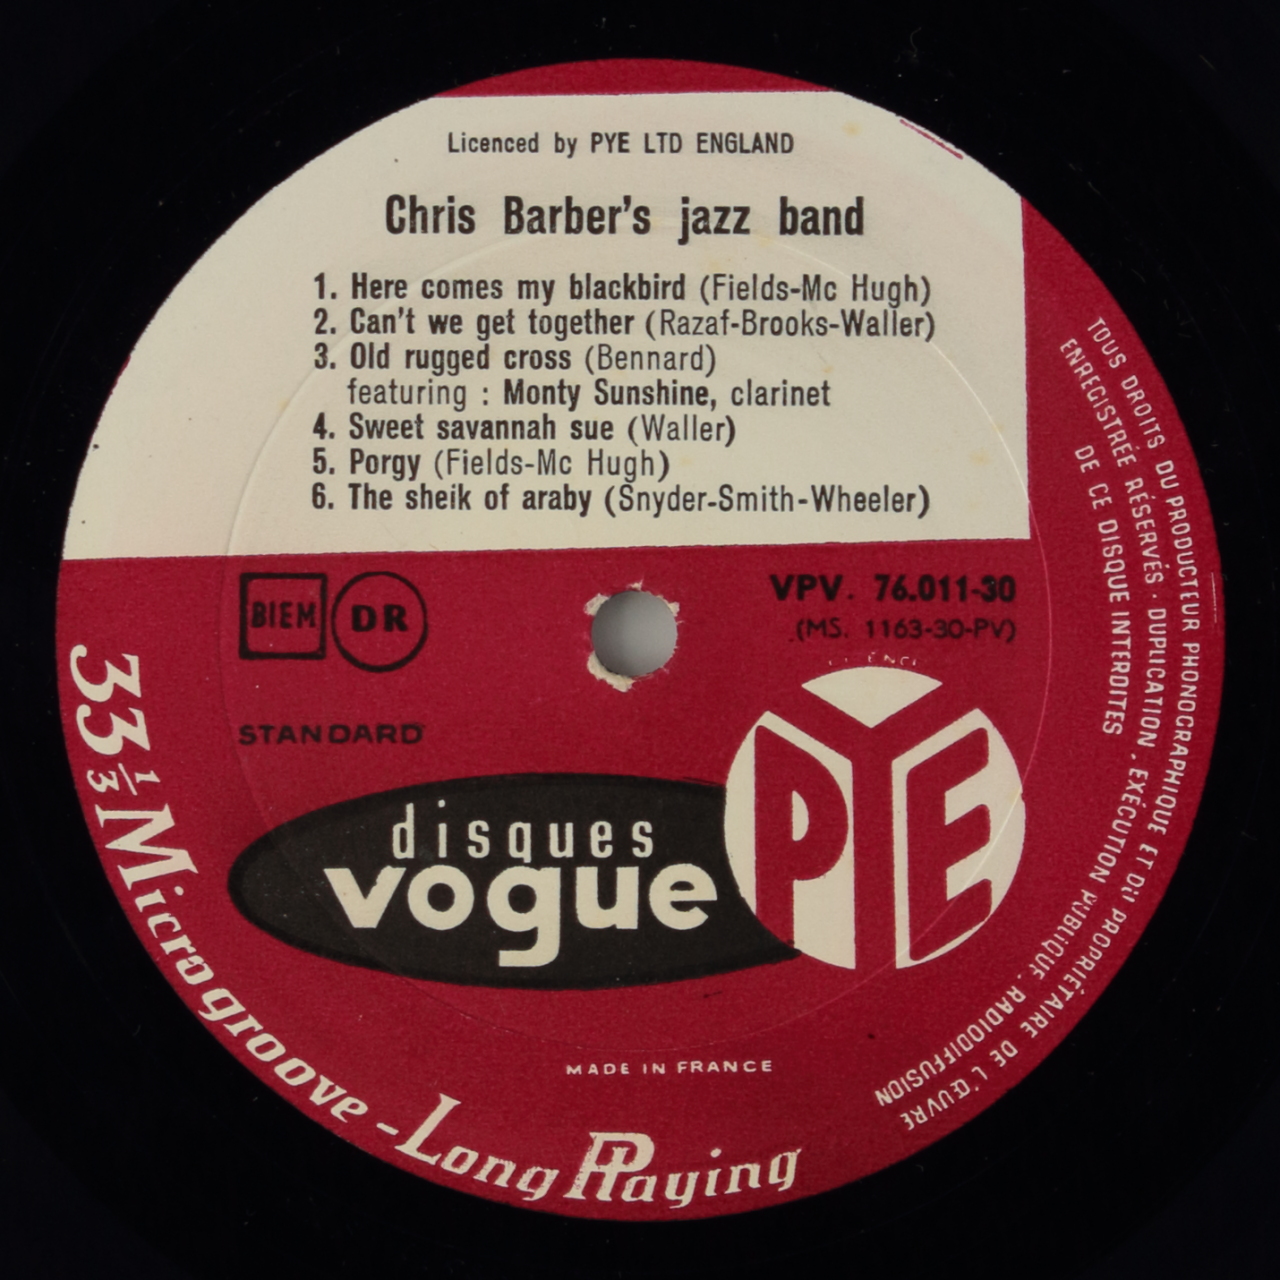 Chris Barber and His Jazz Band Vol. 2